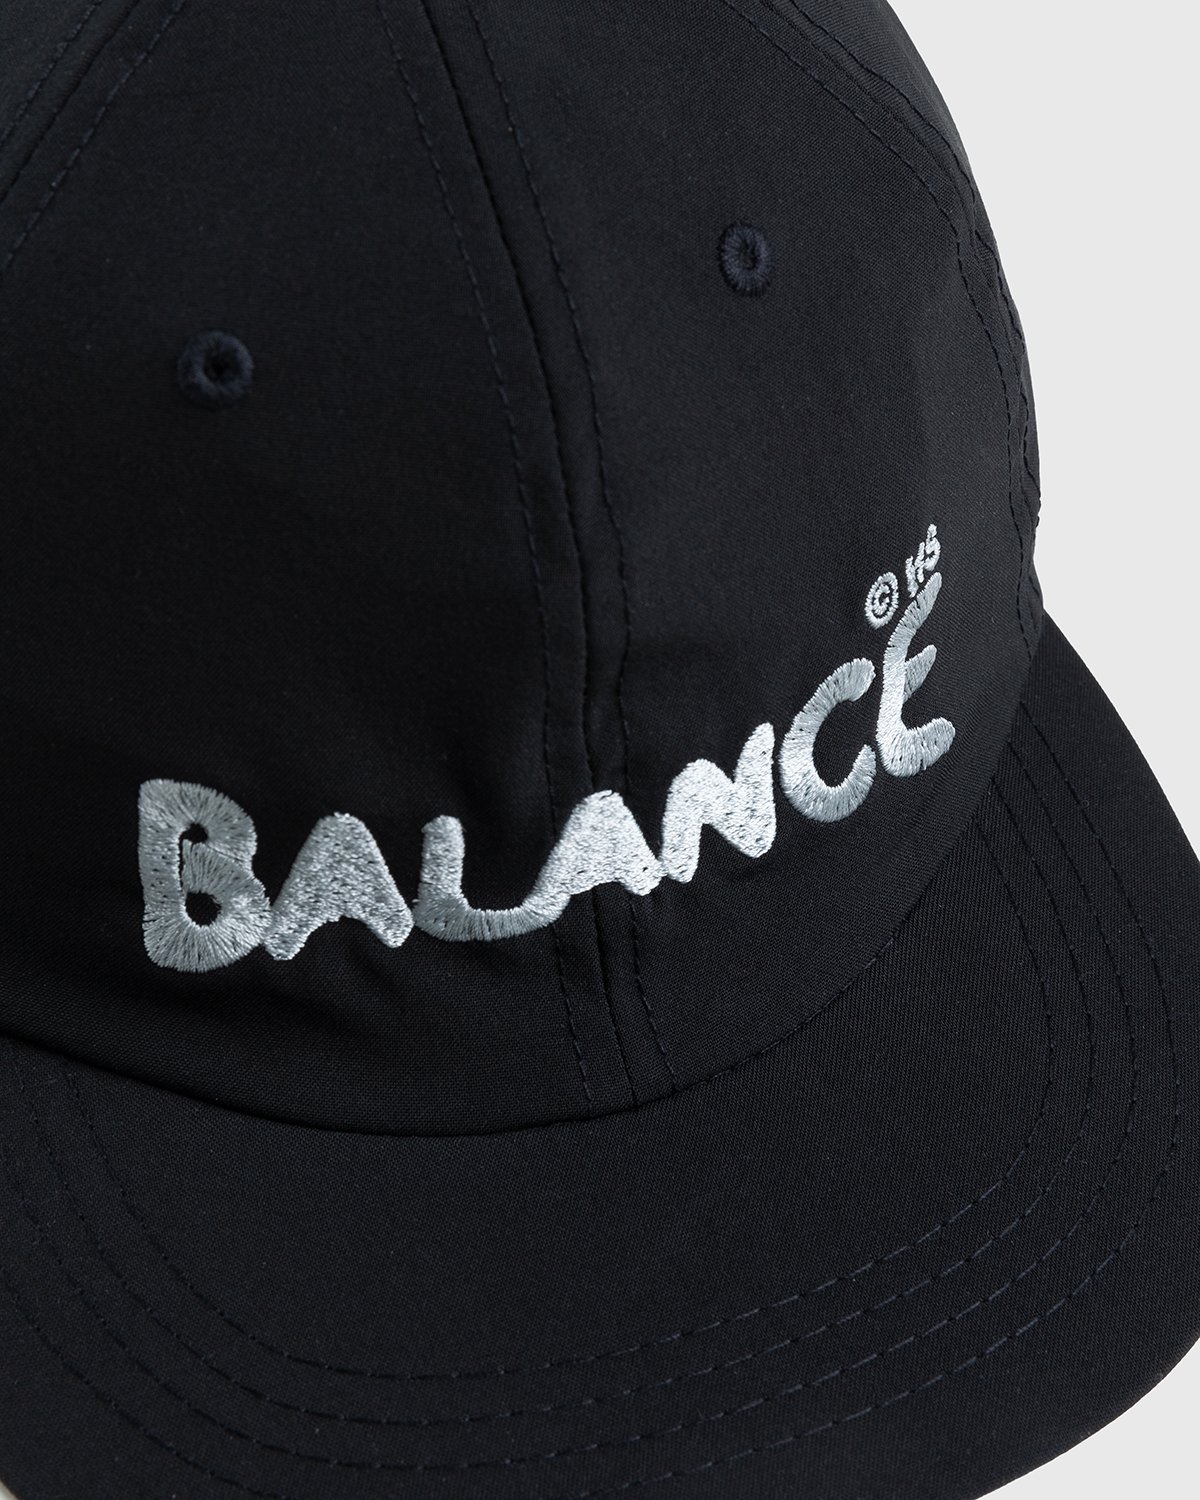 Satisfy x Highsnobiety - HS Sports Balance Running Cap Black - Accessories - Black - Image 4